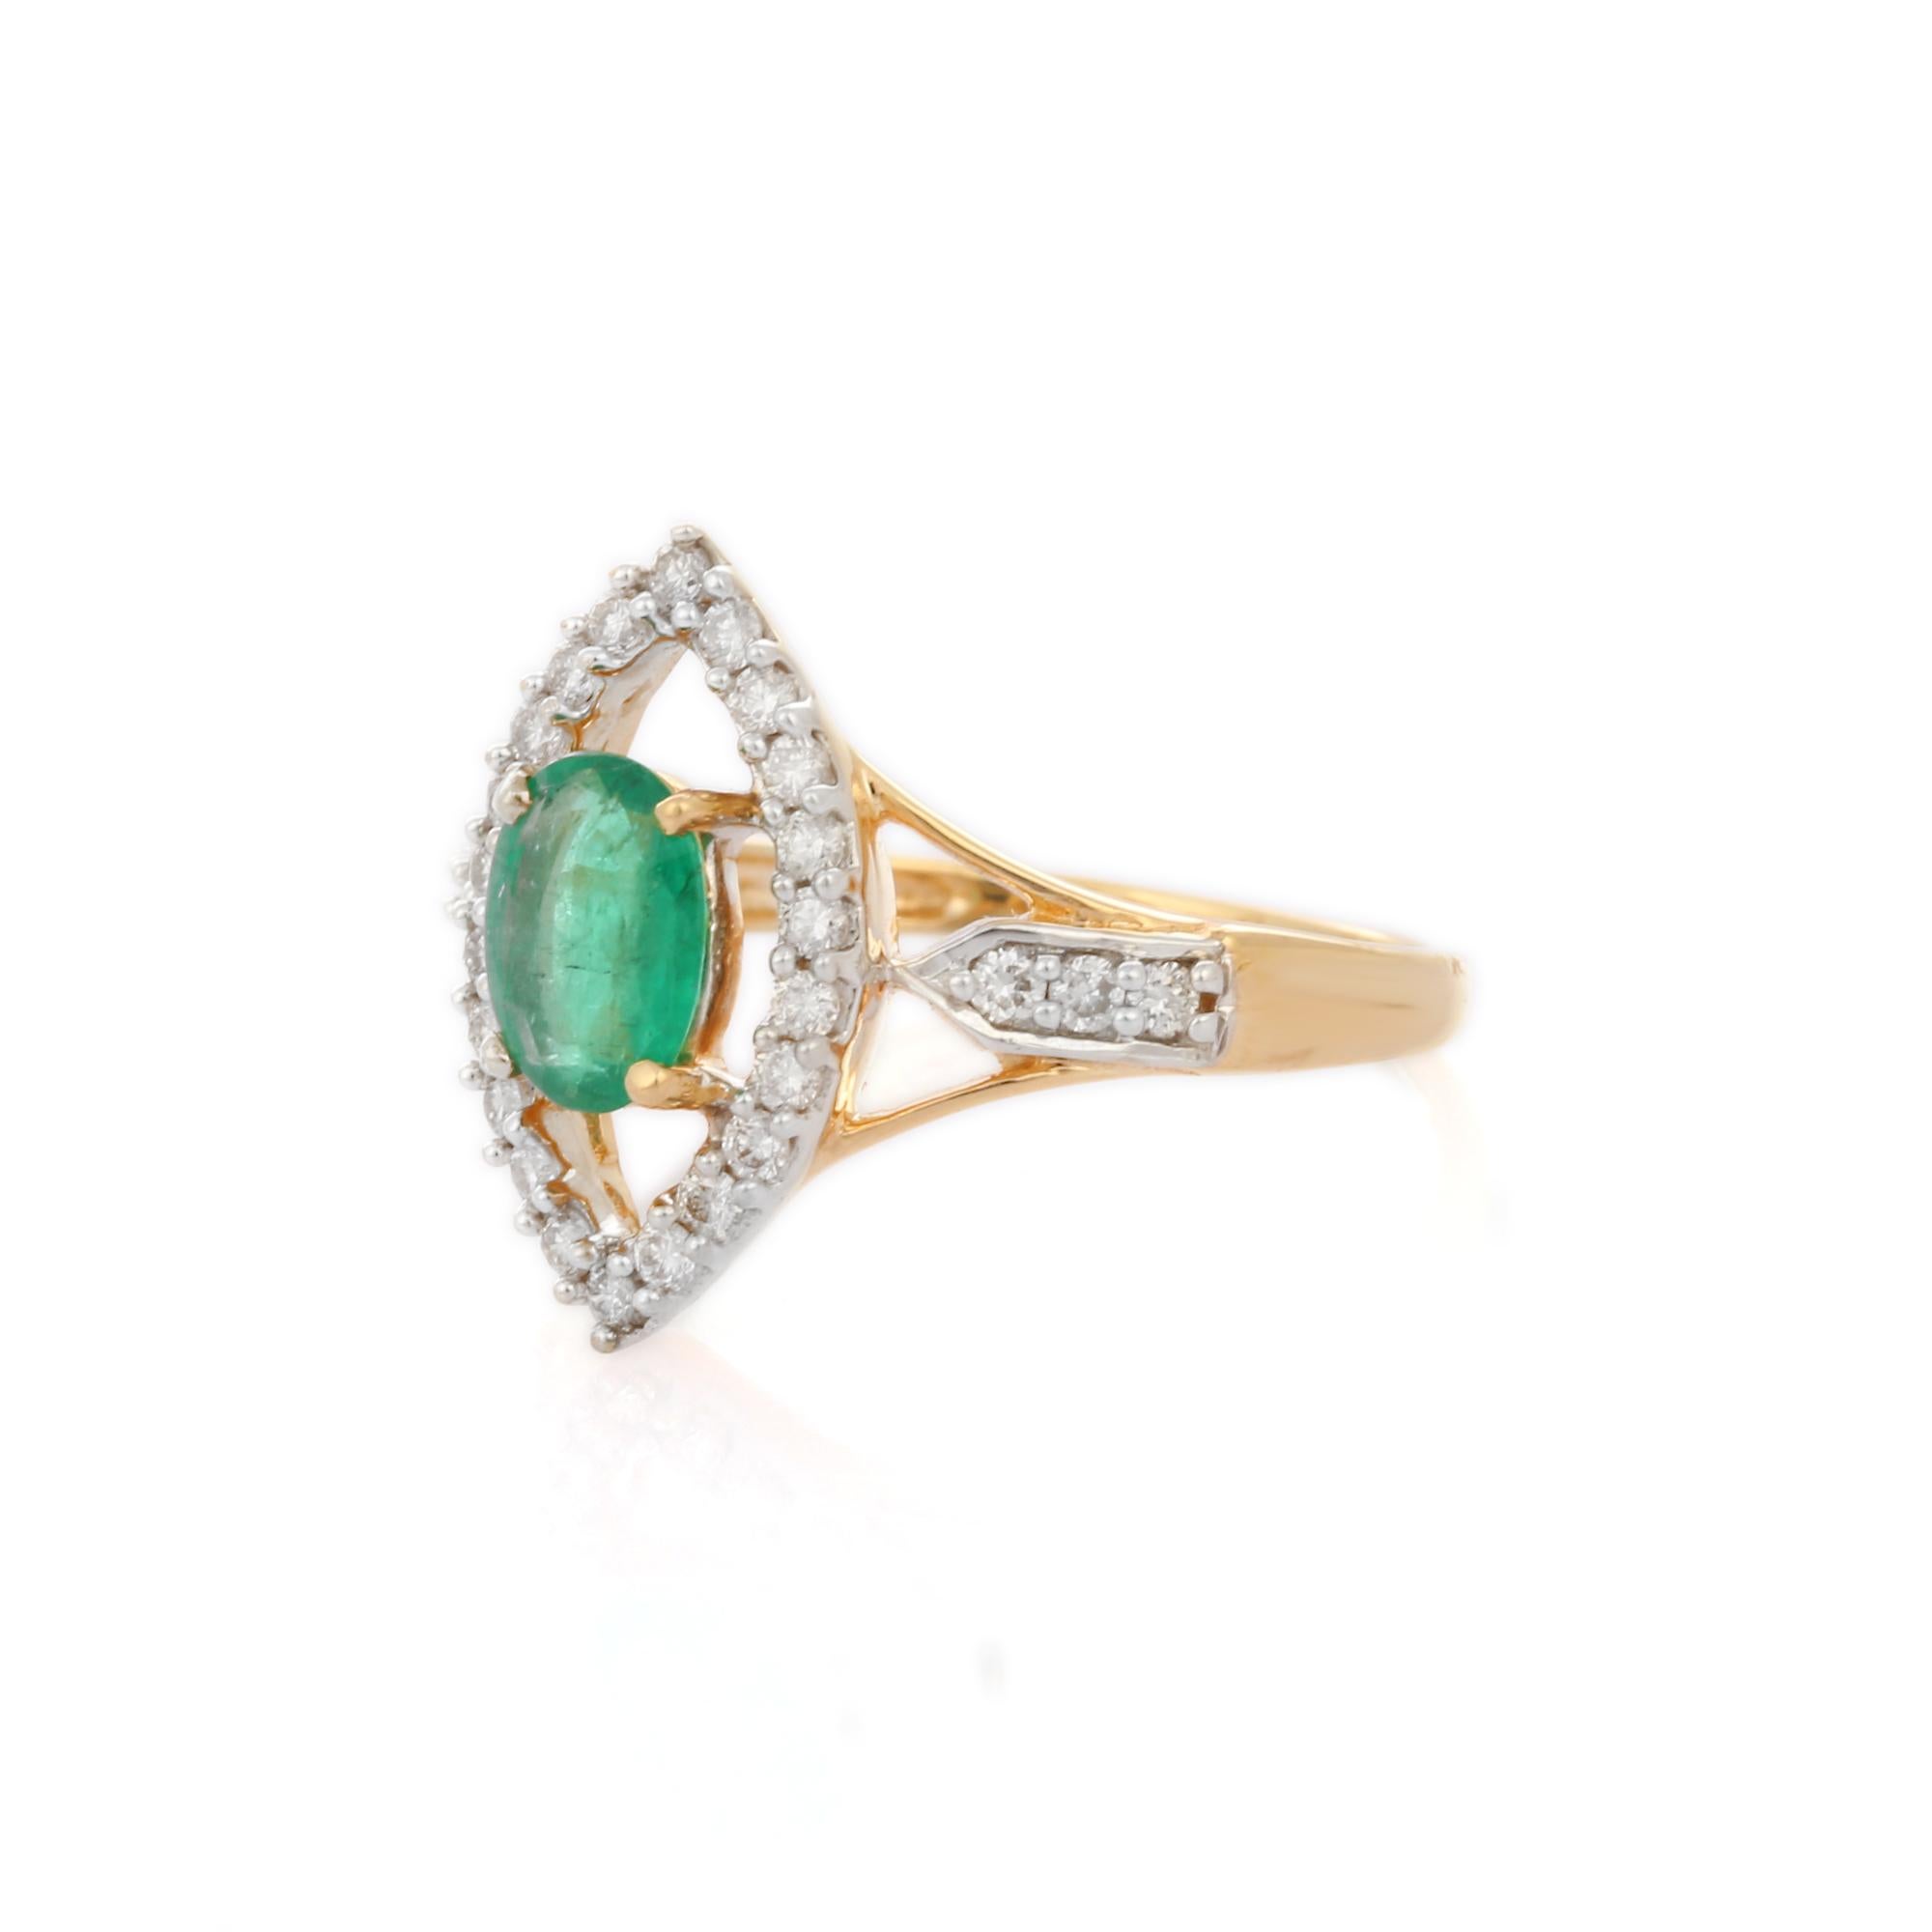 For Sale:  Designer Emerald Diamond Wedding Ring Cocktail Ring in 18K White Gold 2